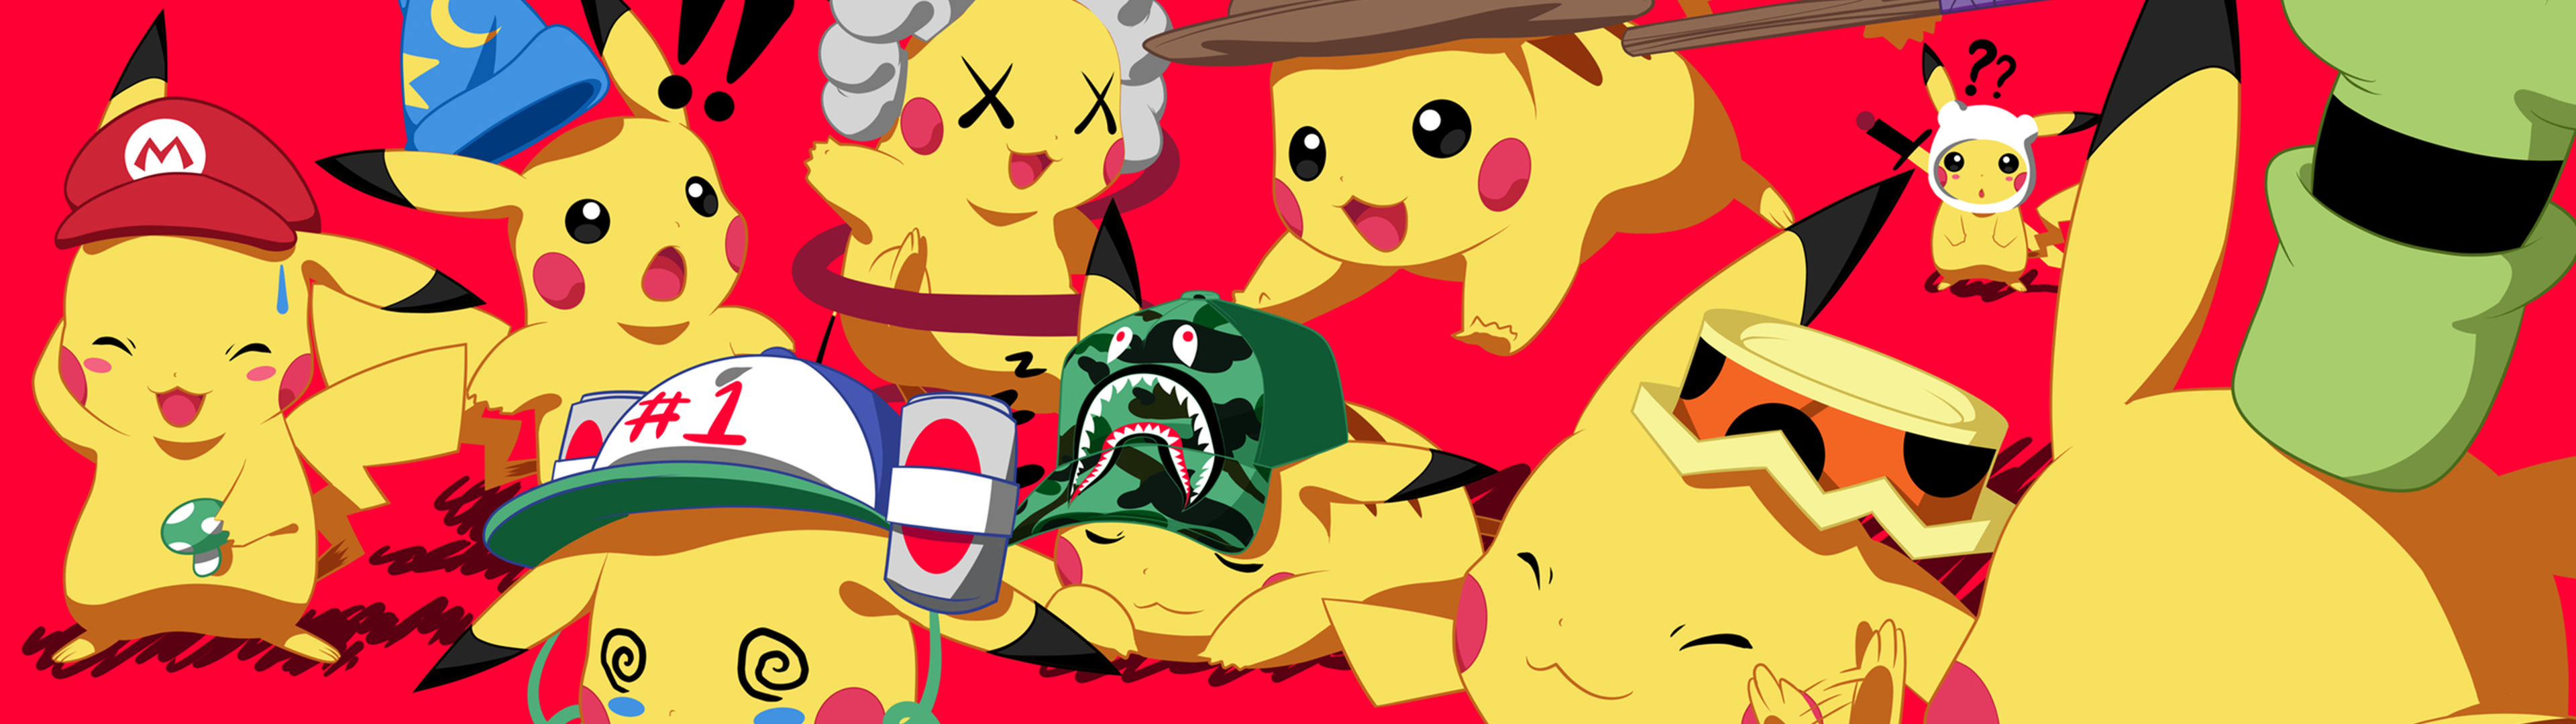 Pikachu Halloween Party